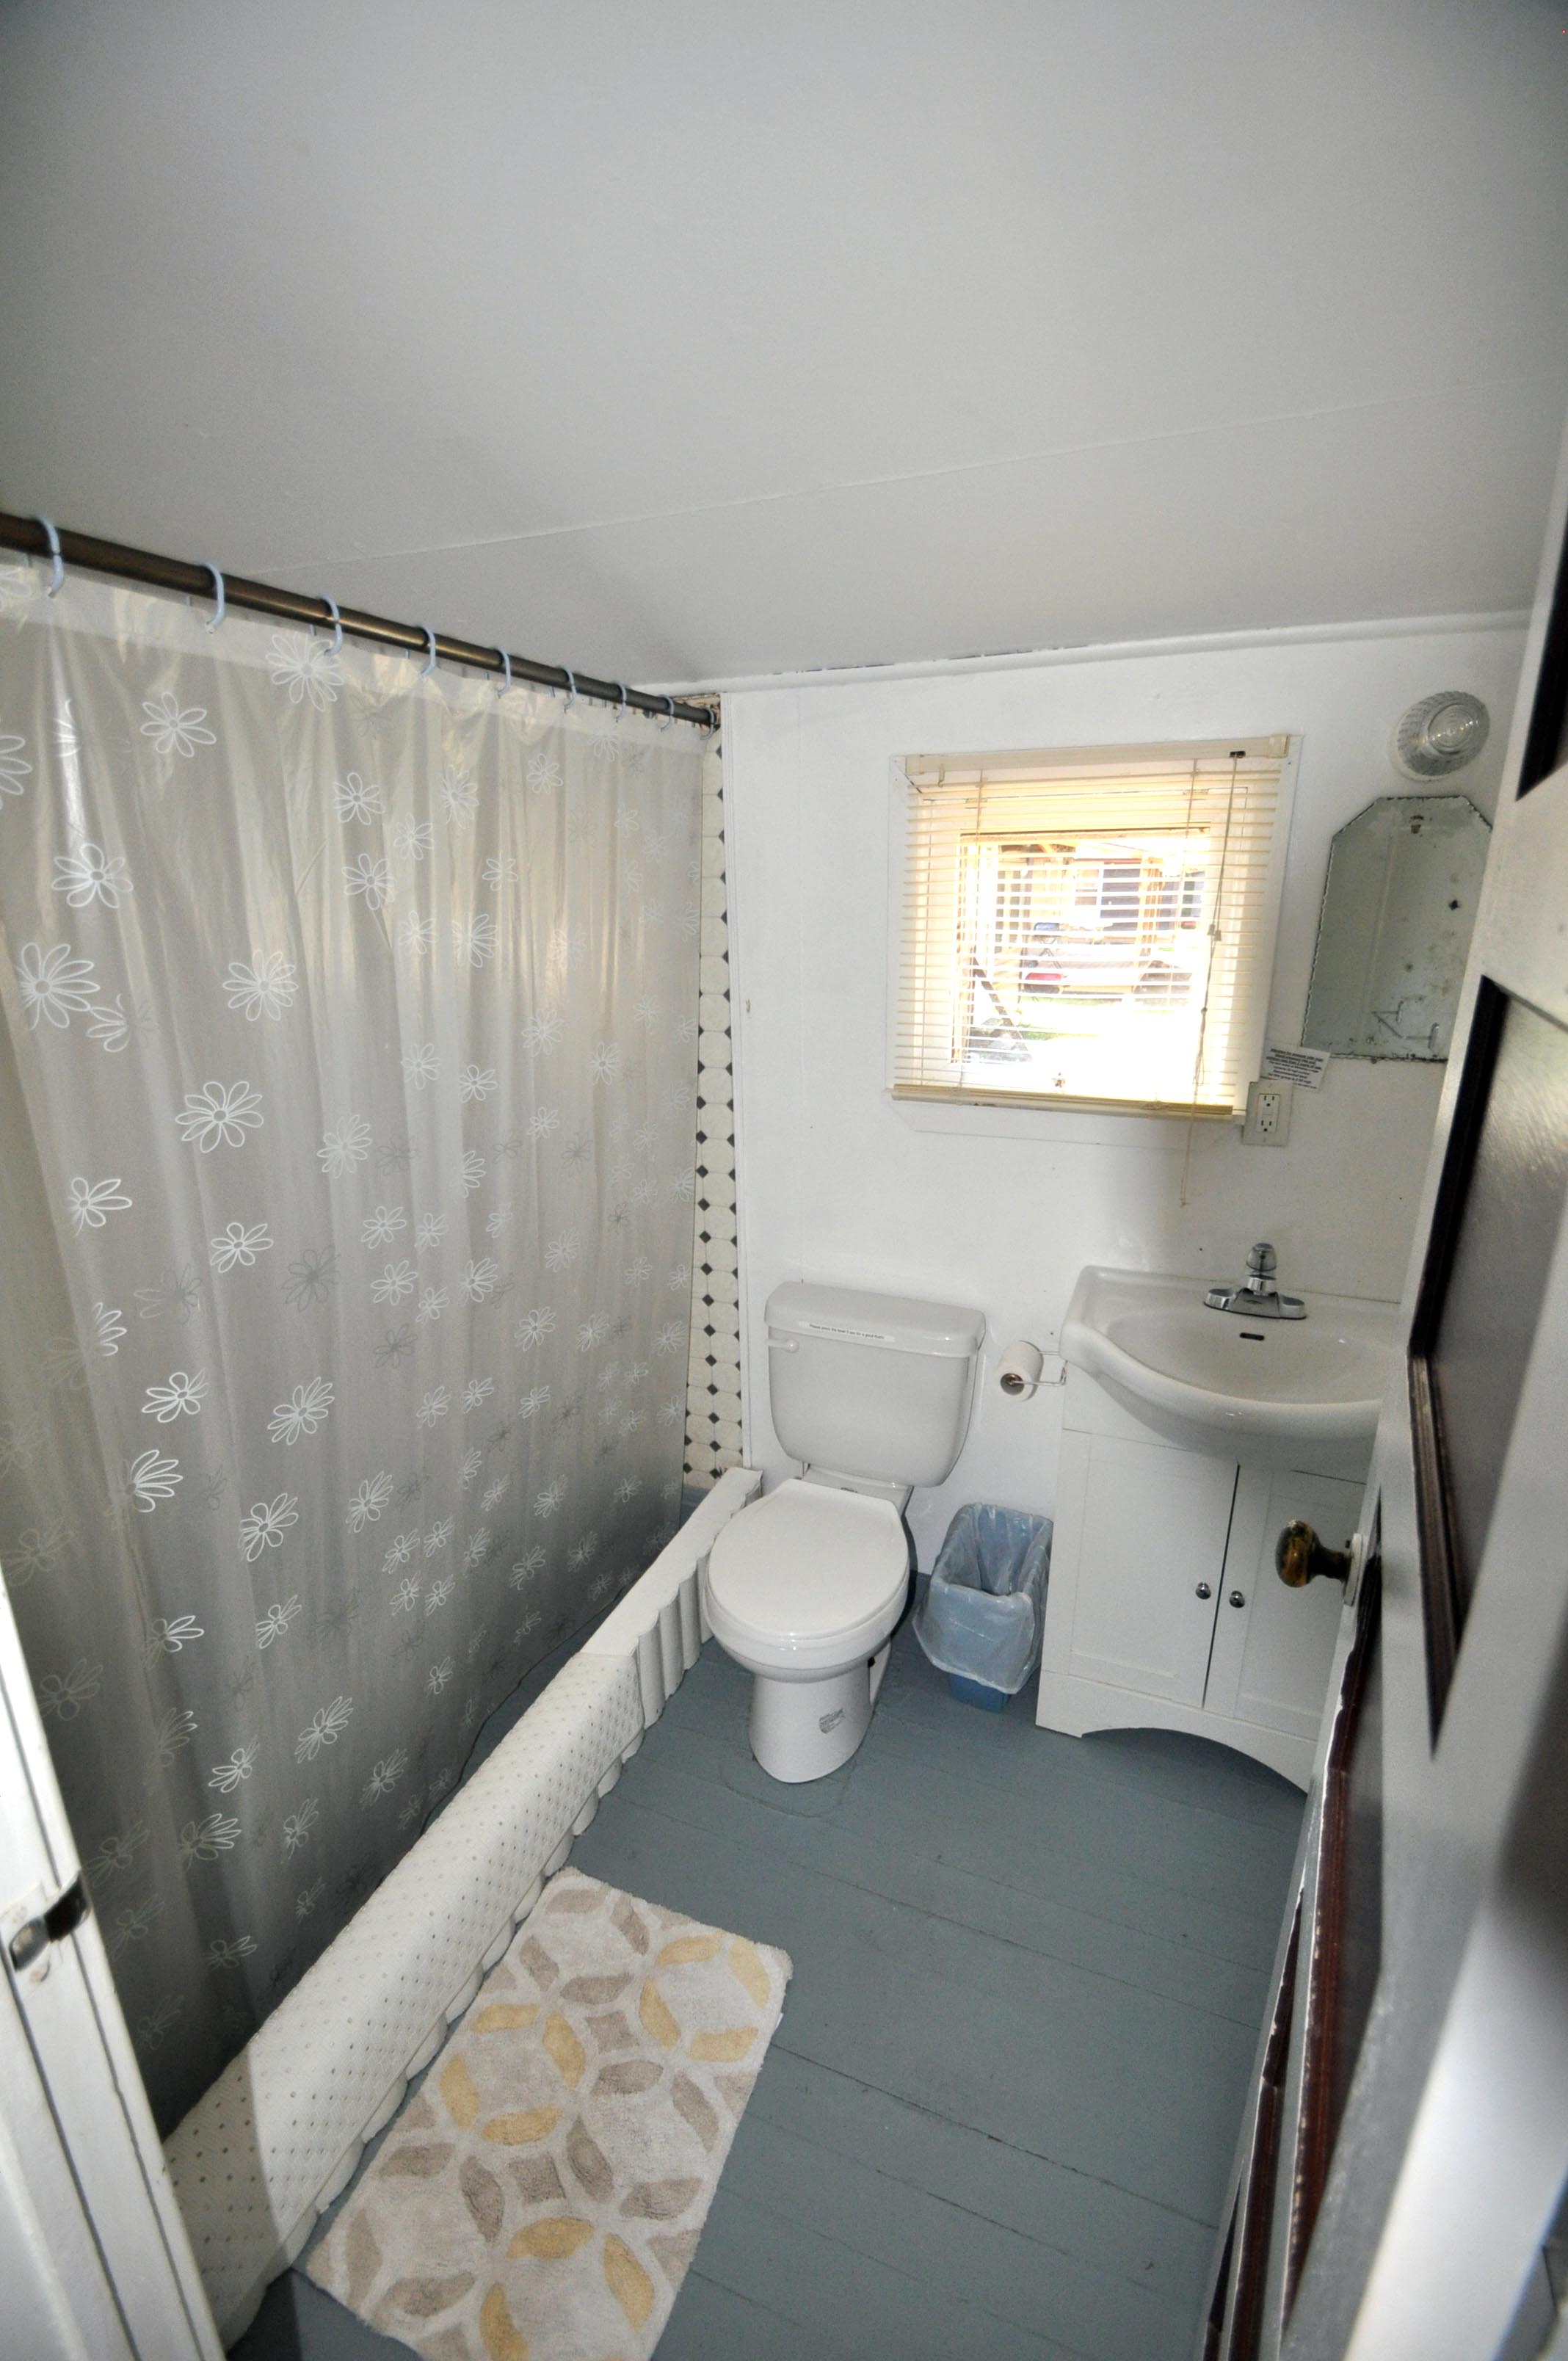 Cabin 3 - bathroom with shower and bathtub.